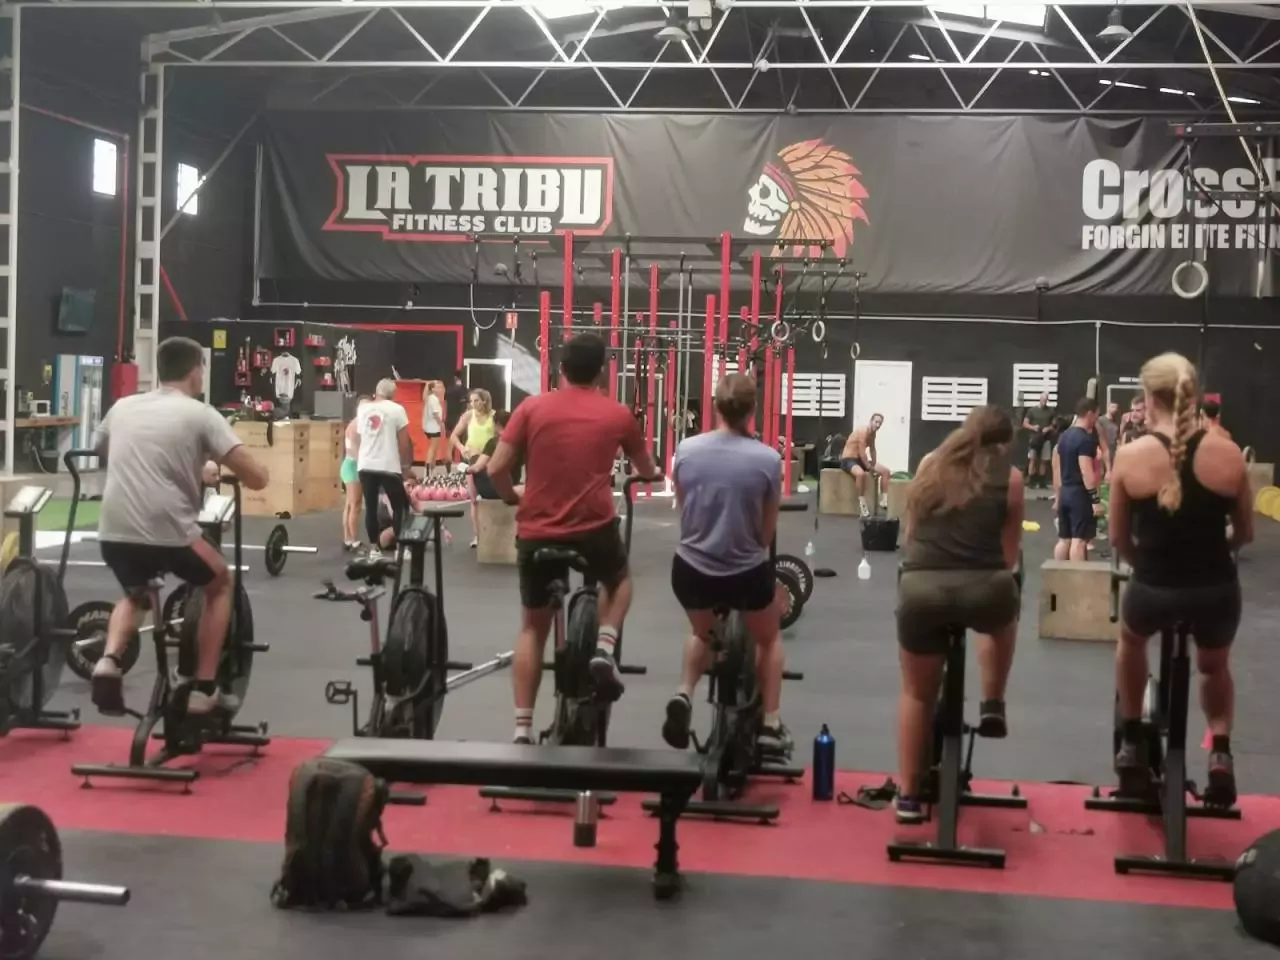 6. La Tribu  - Fitness Club  - CrossFit y más